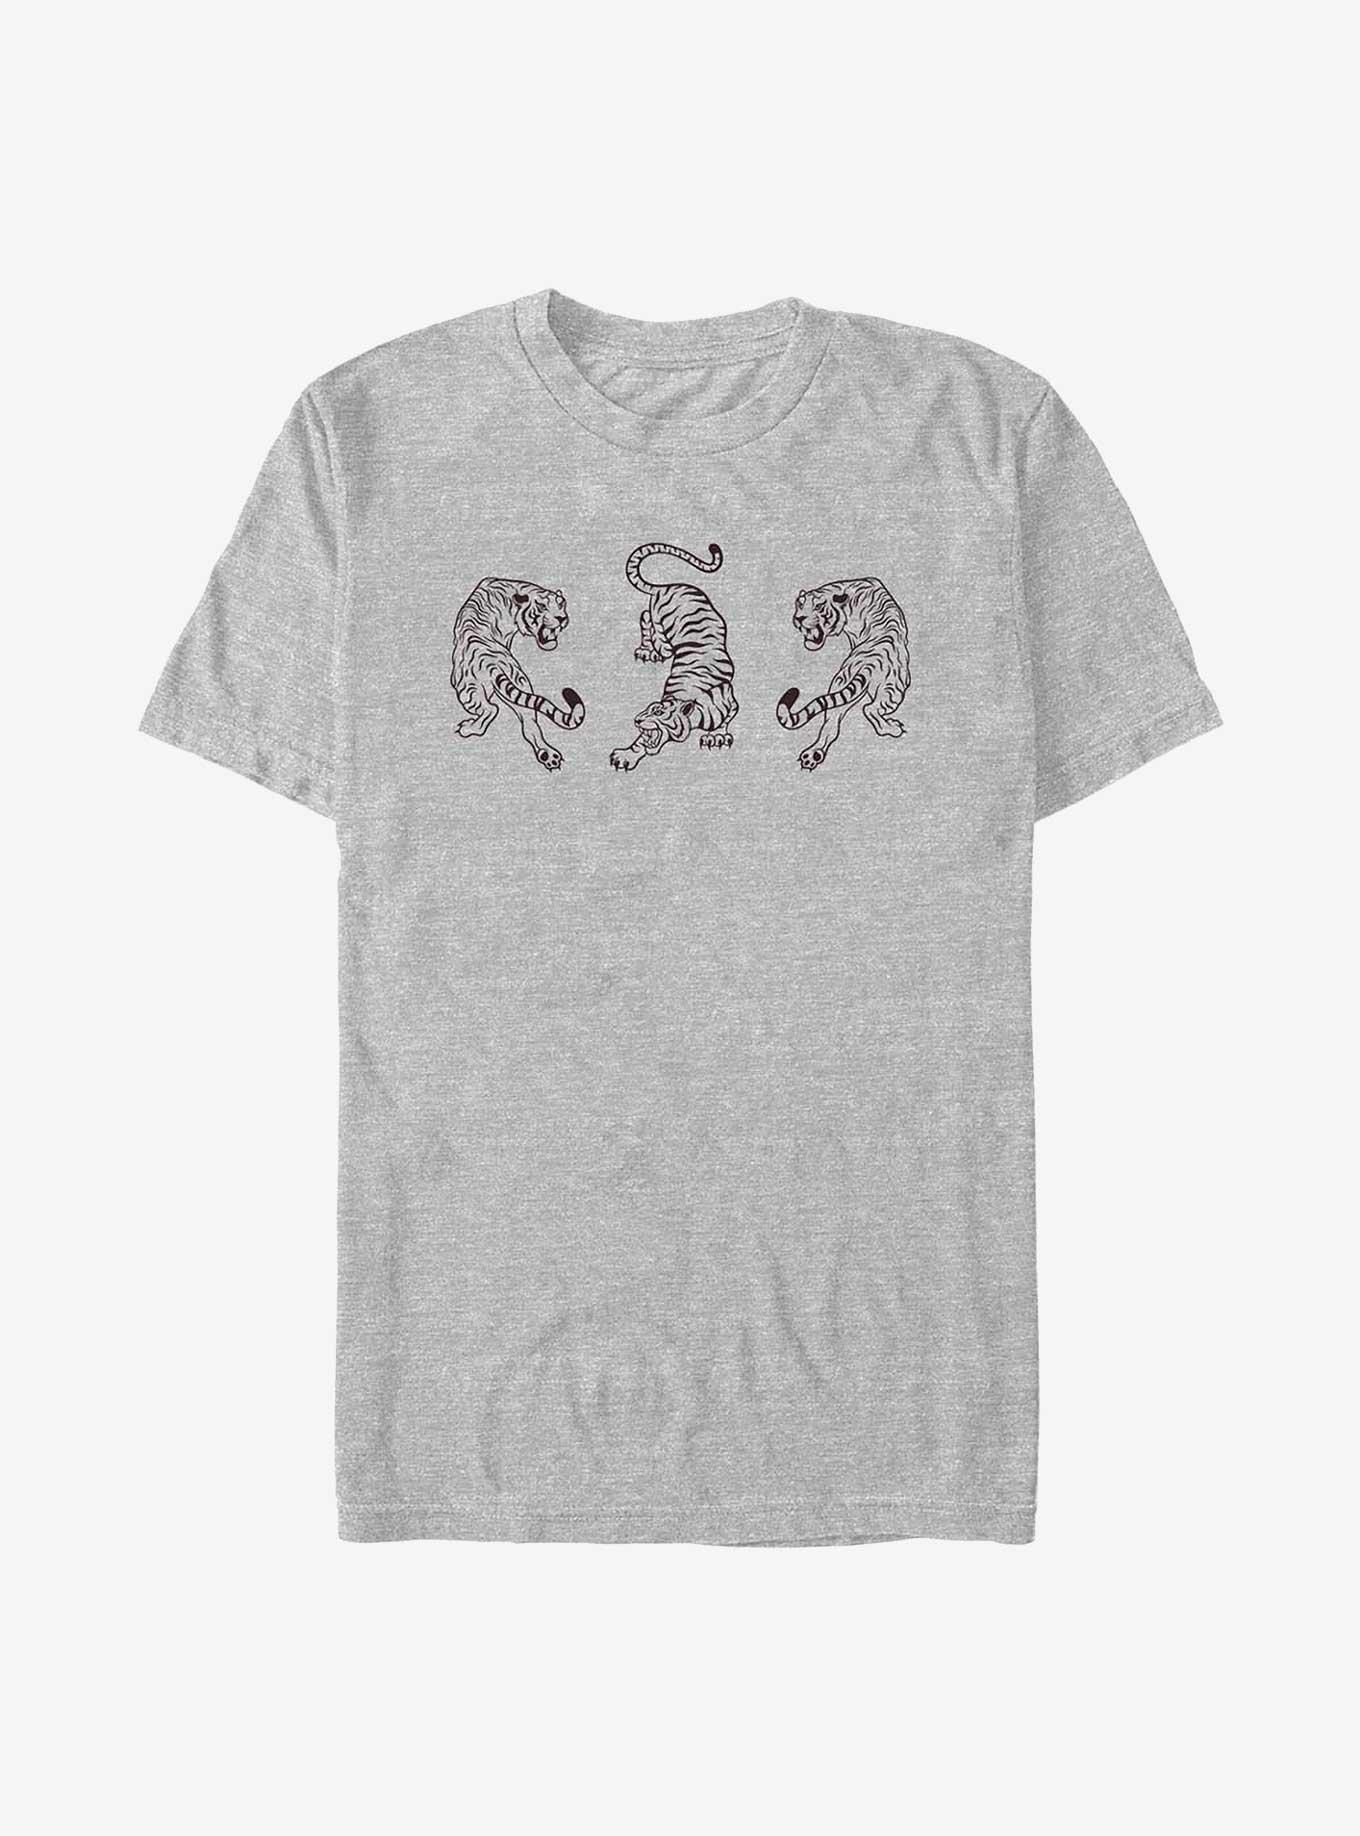 Three Tiger Outline T-Shirt